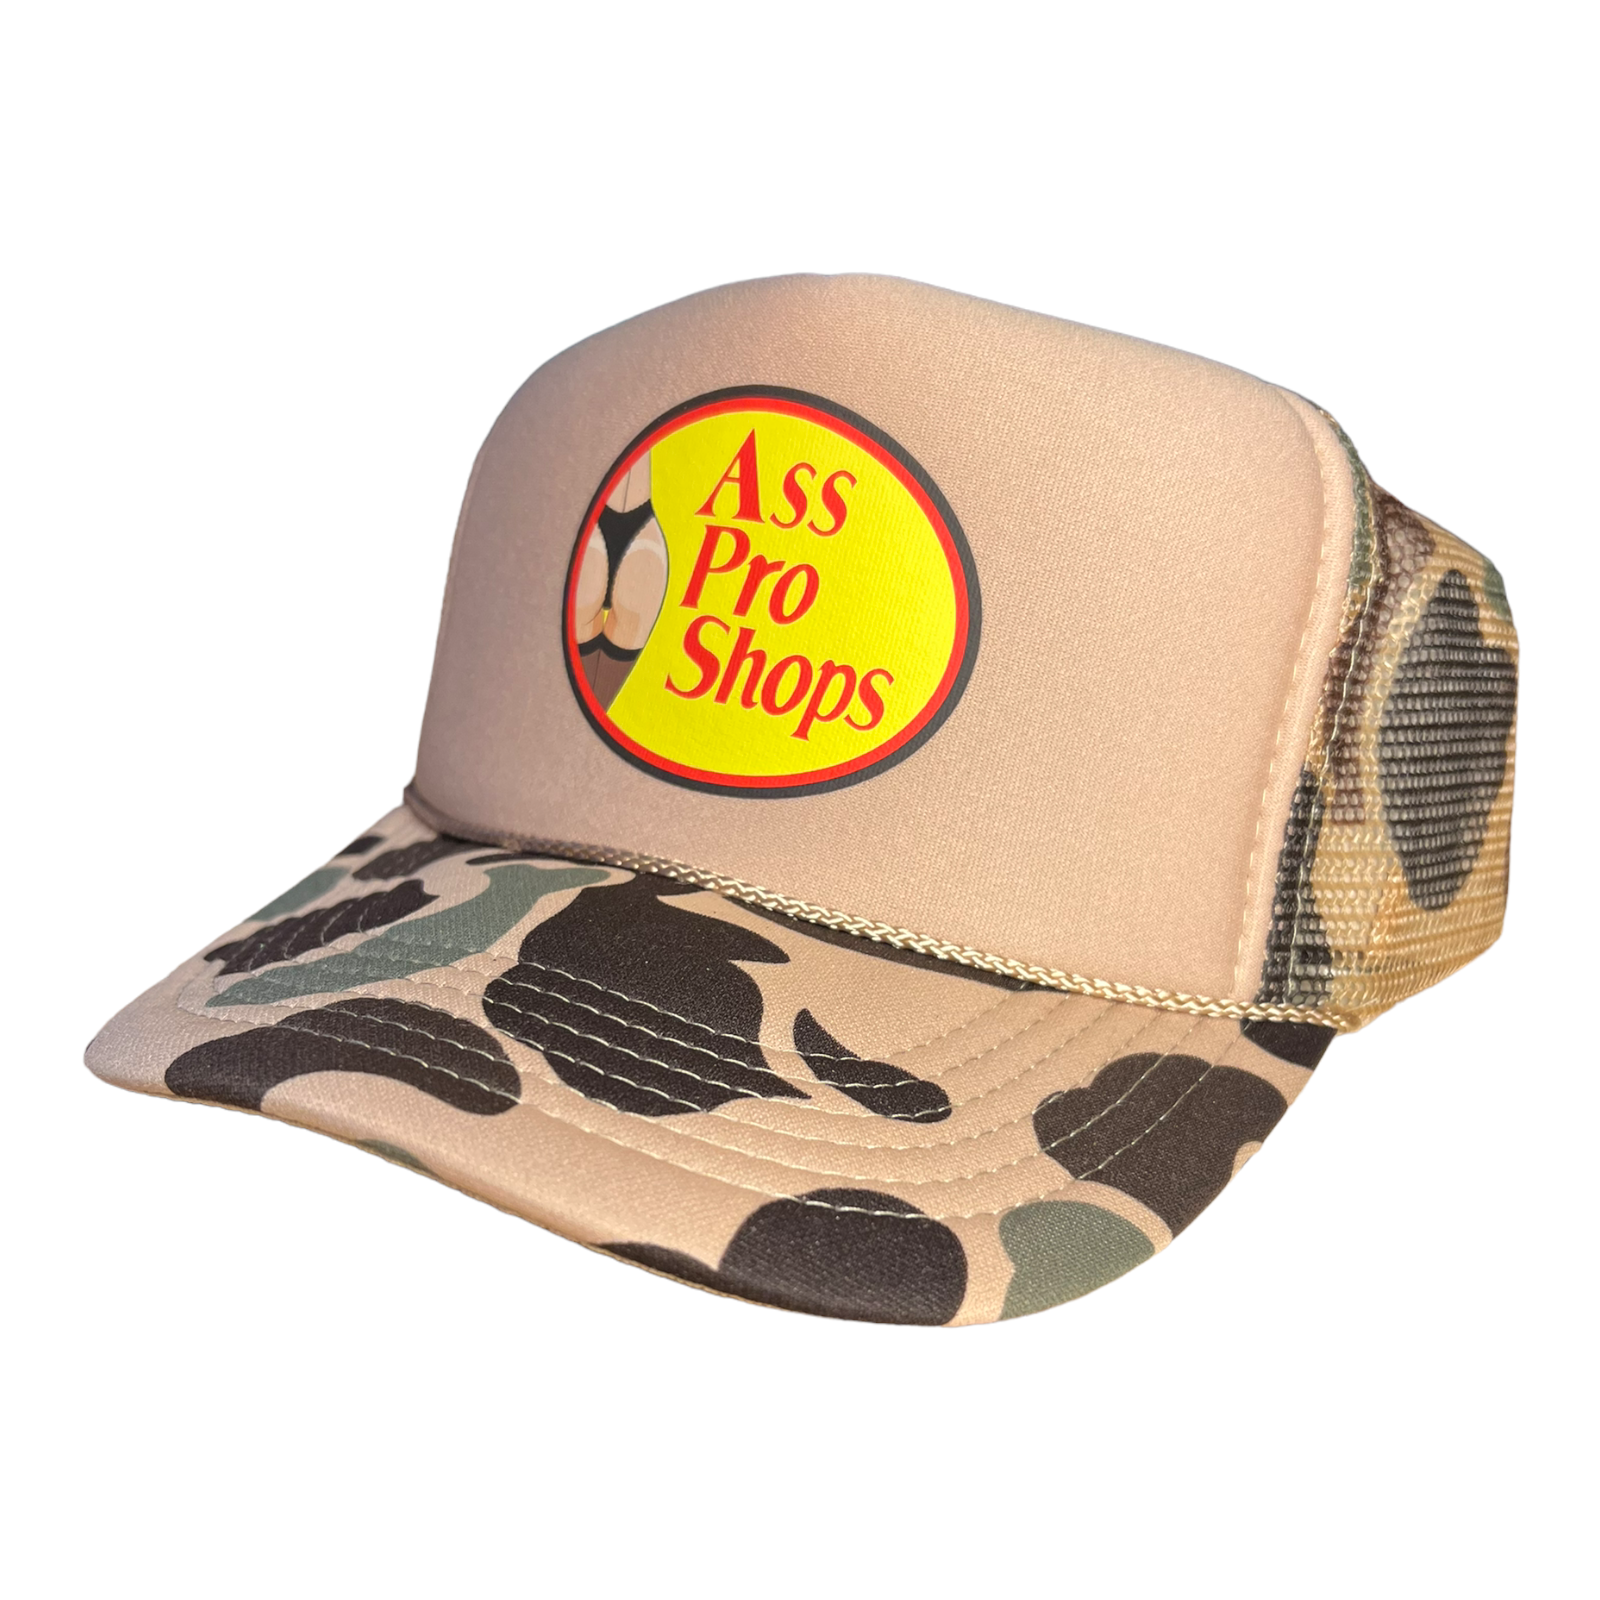 Ass Pro Shops Trucker Hat Funny Trucker Hat Camo – FunnyTruckerHats